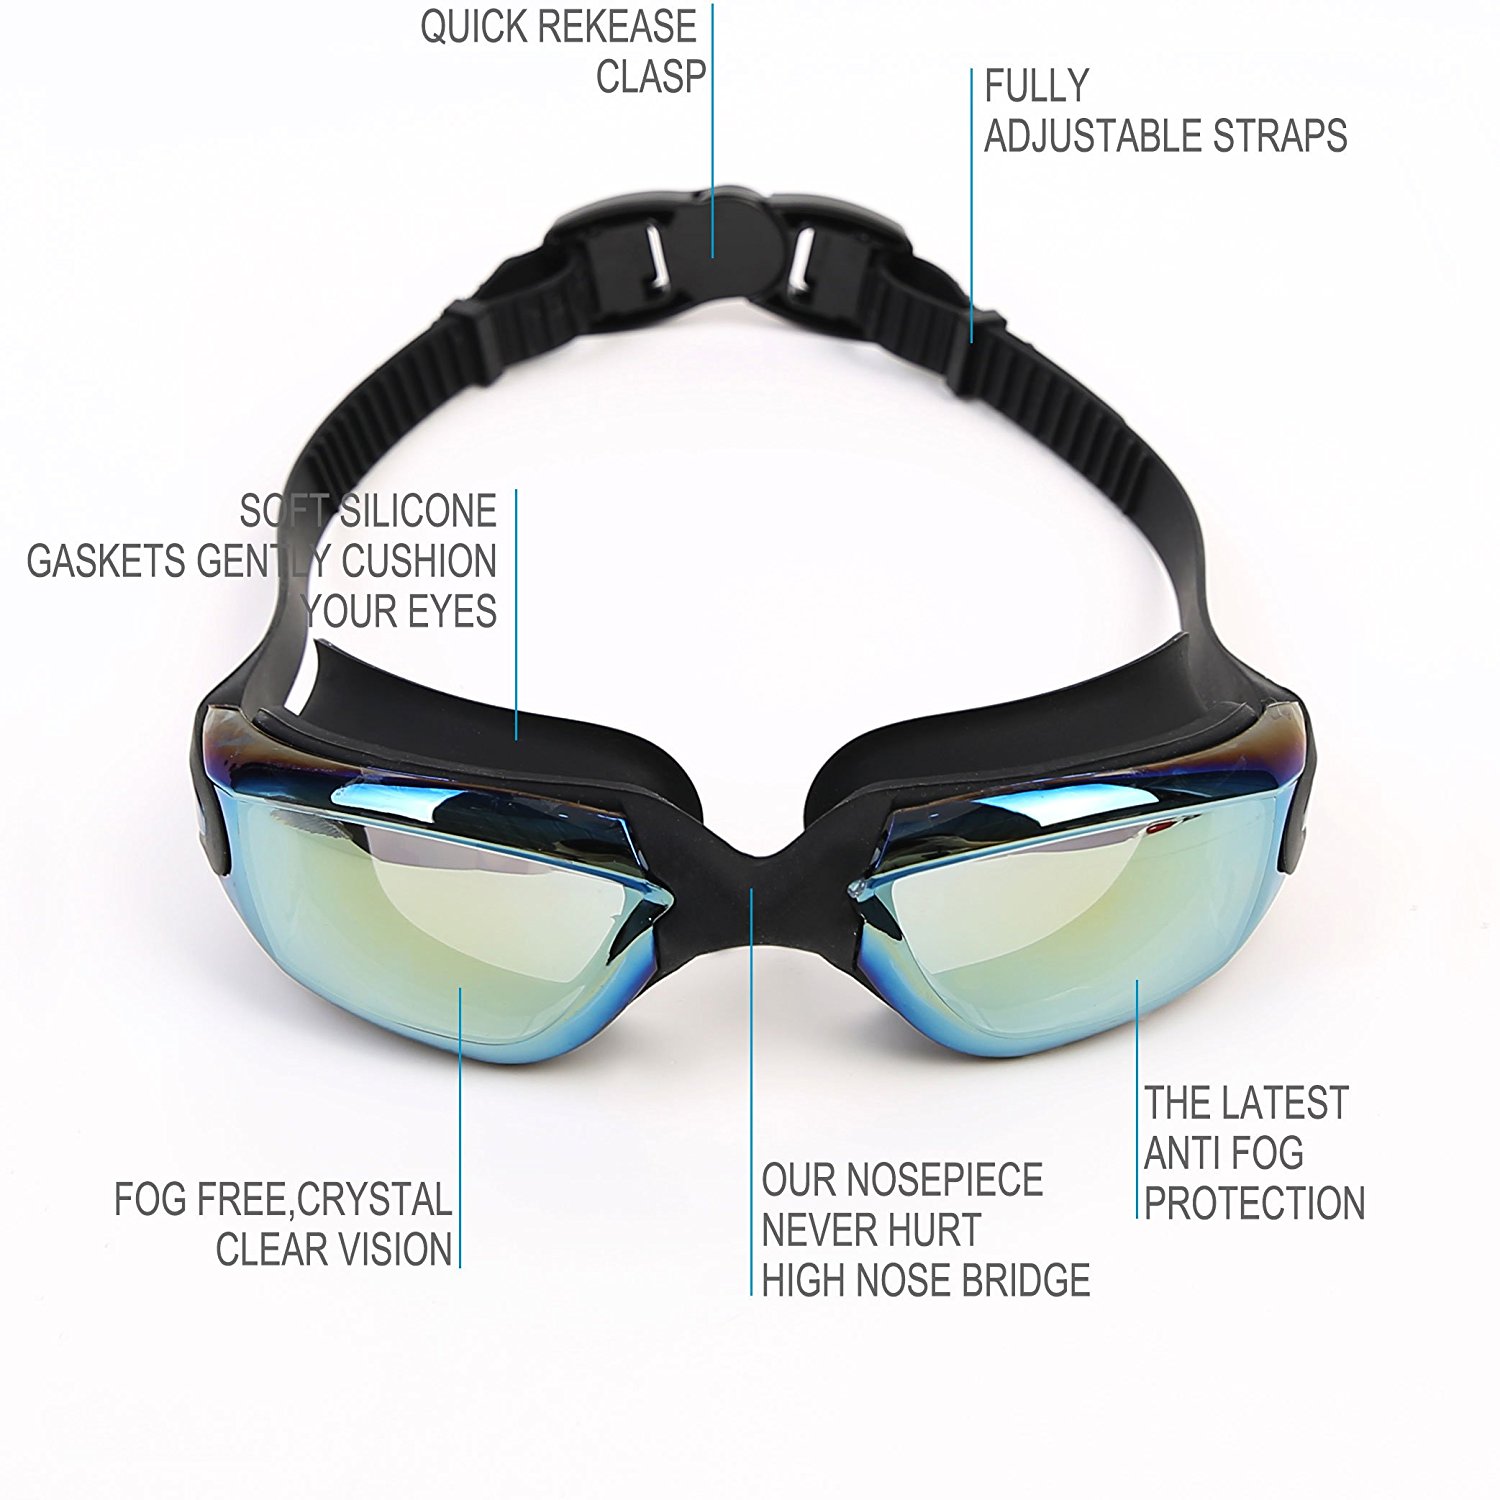 Details about   Best Adult Anti-fog UV Swimming Glasses Adjustable Nose Clip show original title Ohs1 